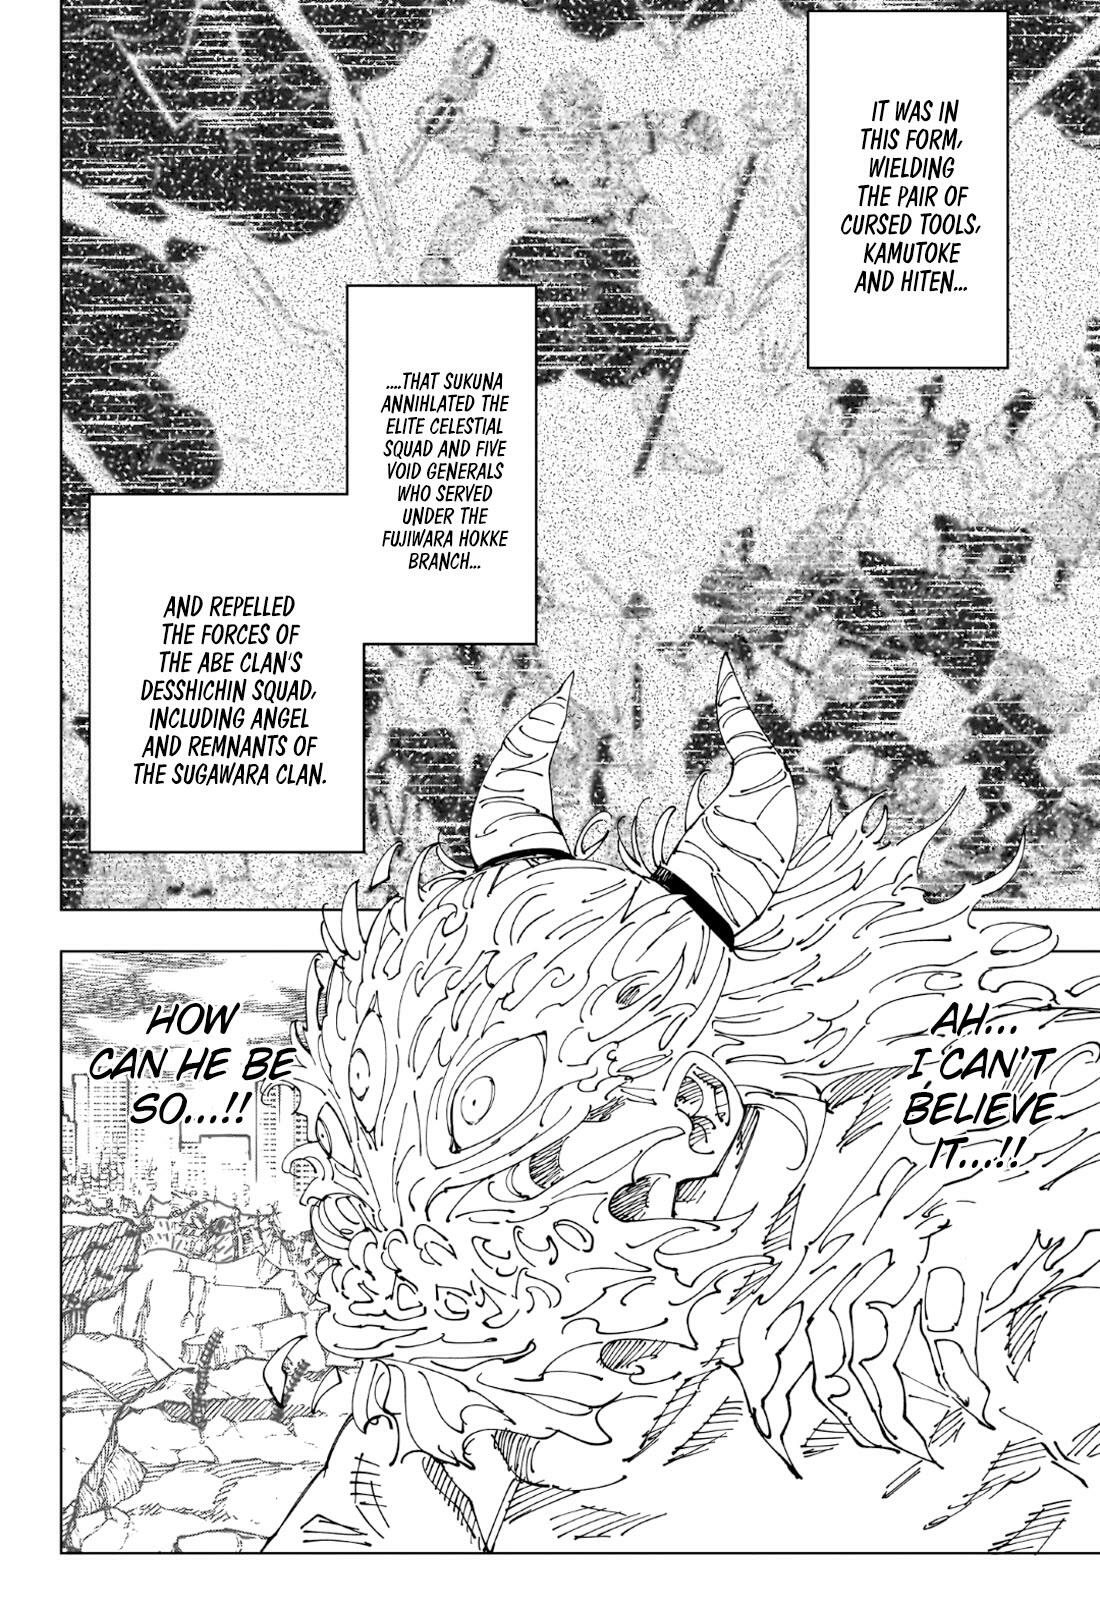 Jujutsu Kaisen Chapter 238: Chapter 238: The Decisive Battle In The Uninhabited, Demon-Infested Shinjuku ⑮ page 4 - Mangakakalot